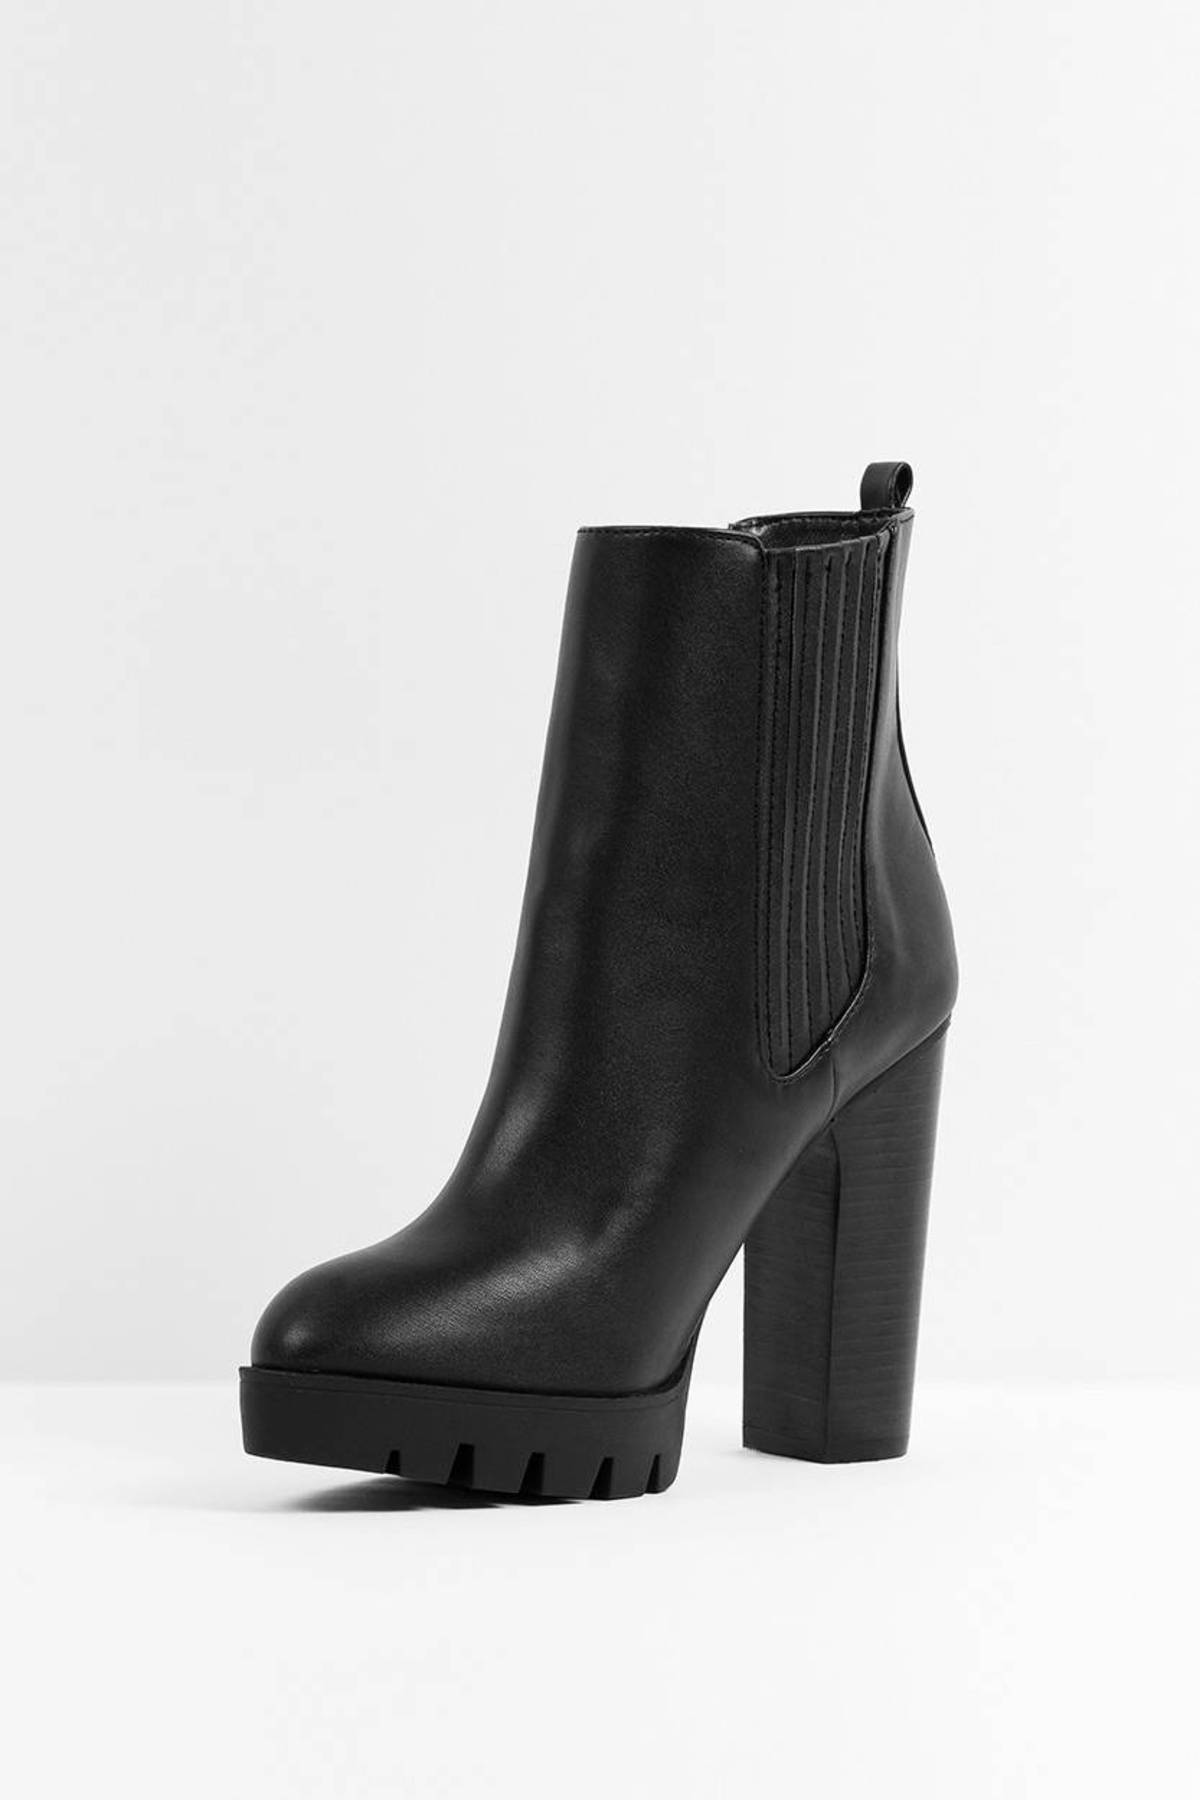 Polk High Heeled Chelsea Boots in Black - $119 | Tobi US